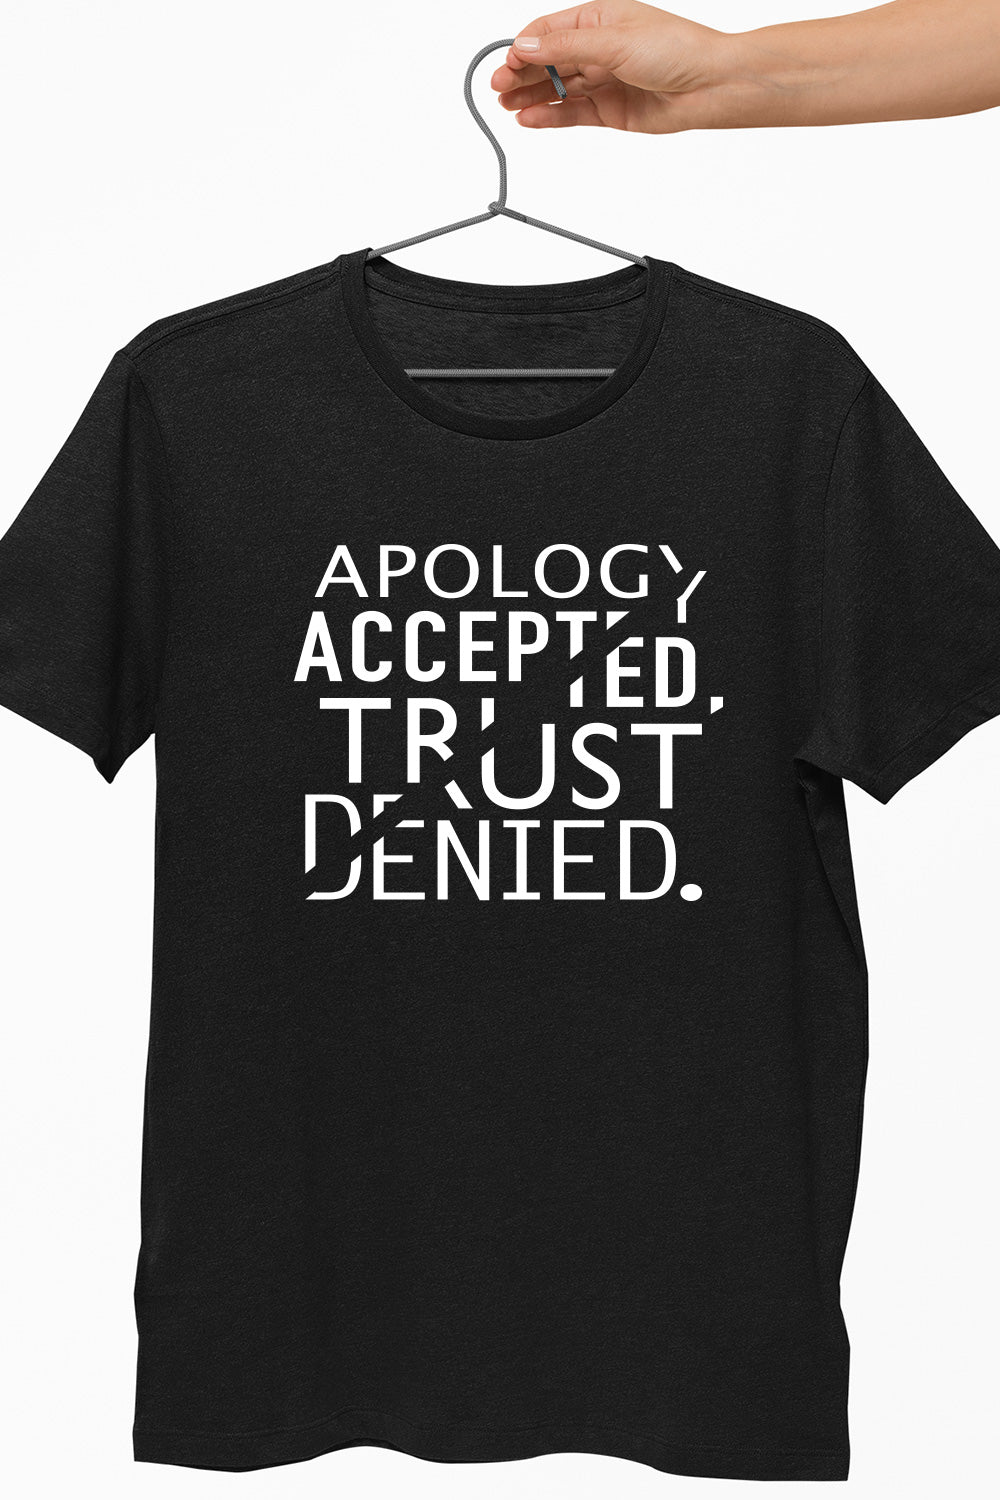 Apology Accepted Trust Denied Black Tshirt